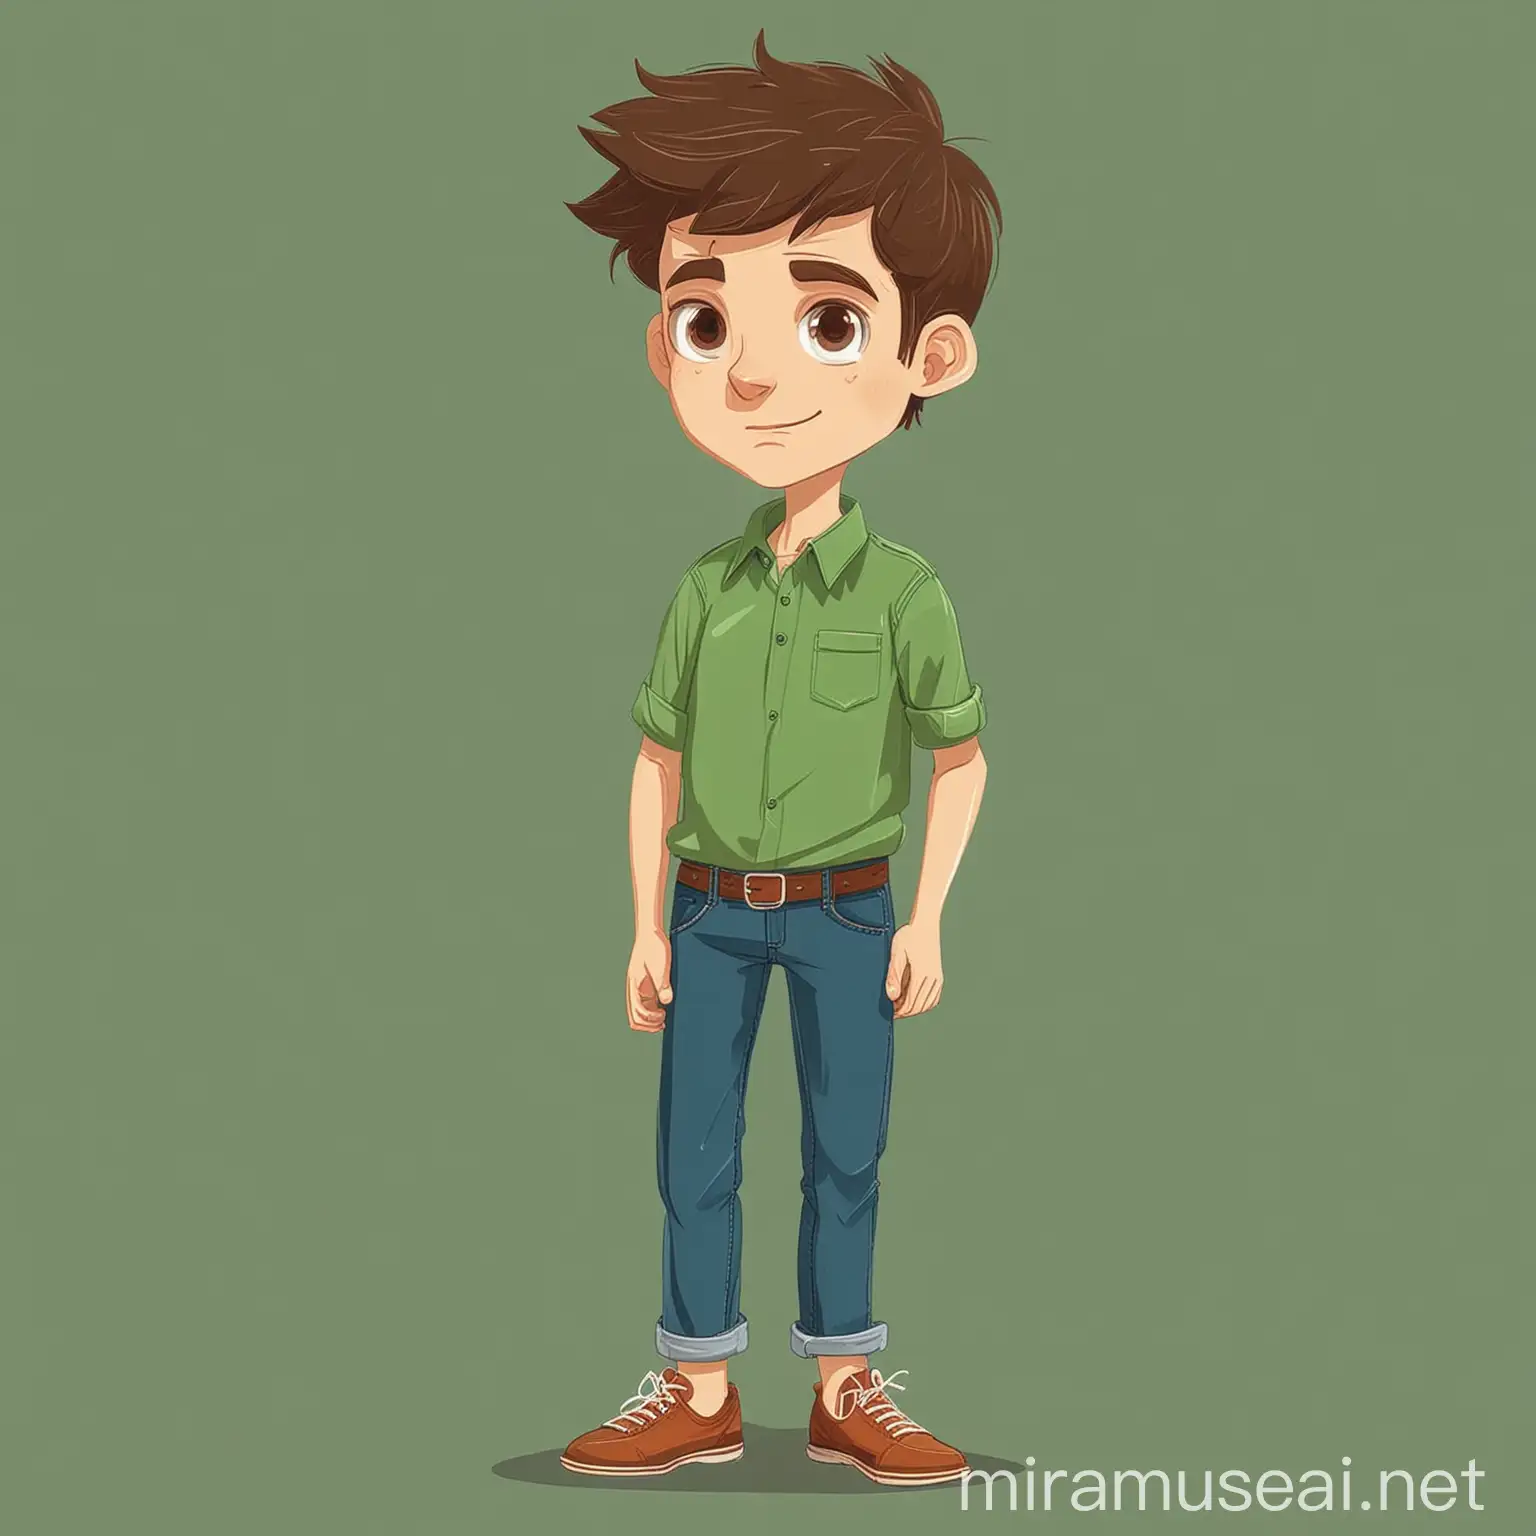 Boy in Green Shirt Flat Vector Style Illustration